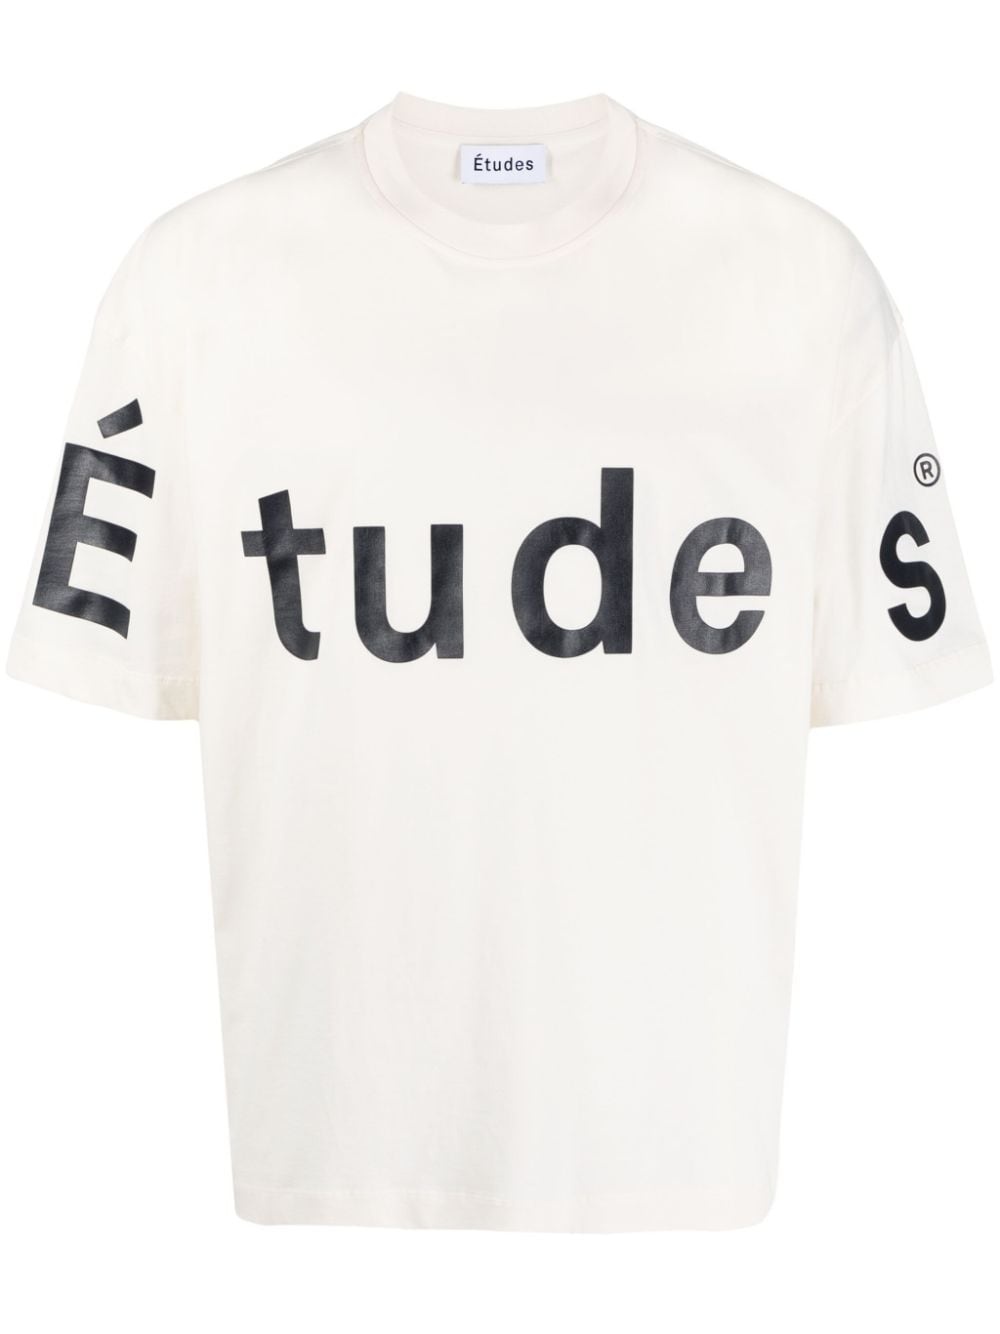 Etude studio ビッグロゴビッグTシャツ Lサイズ - Tシャツ